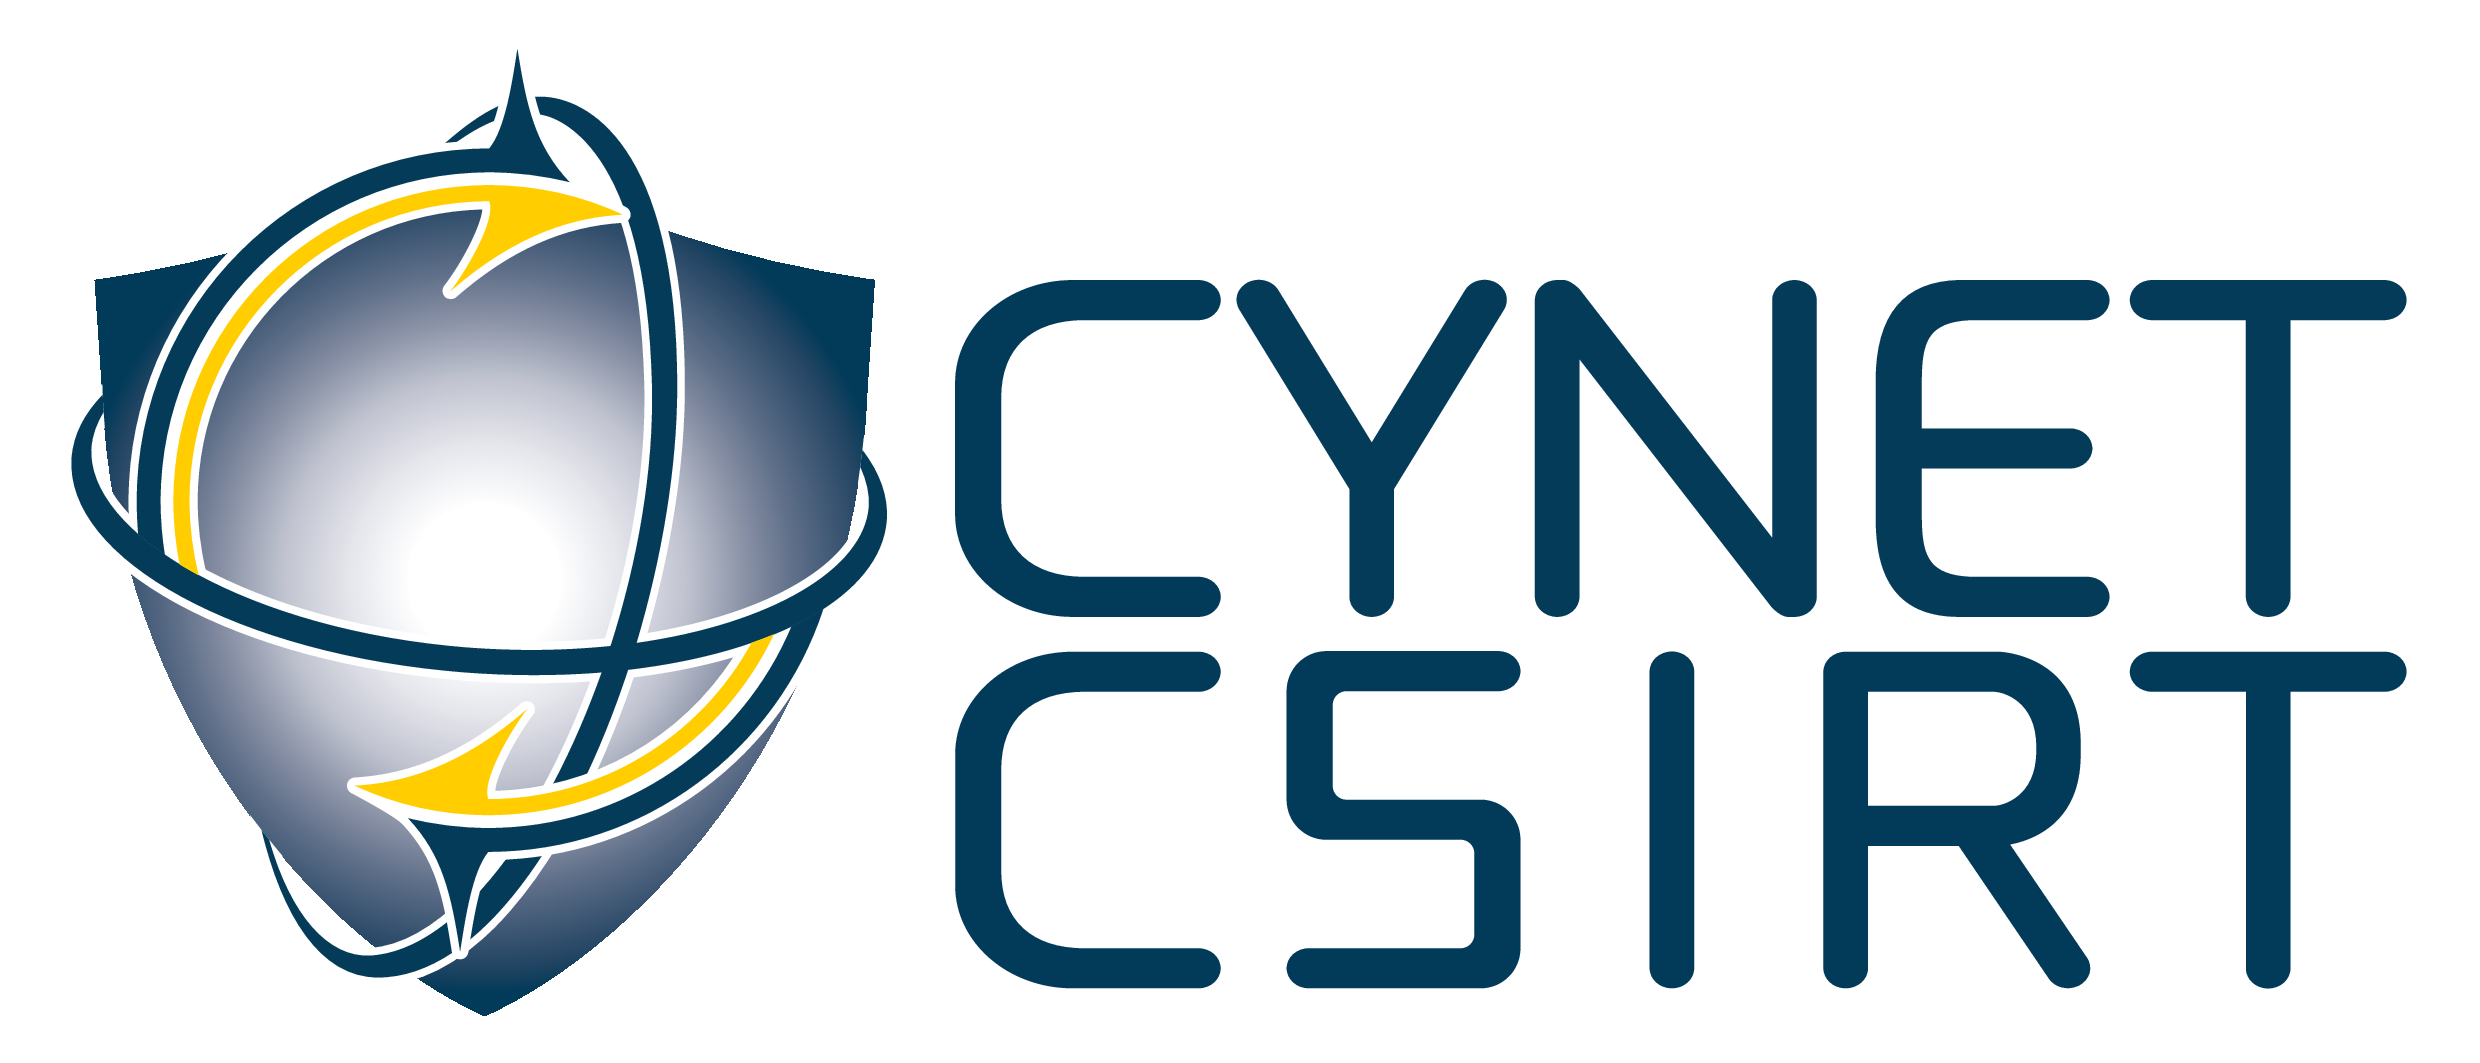 CYNET-CSIRT